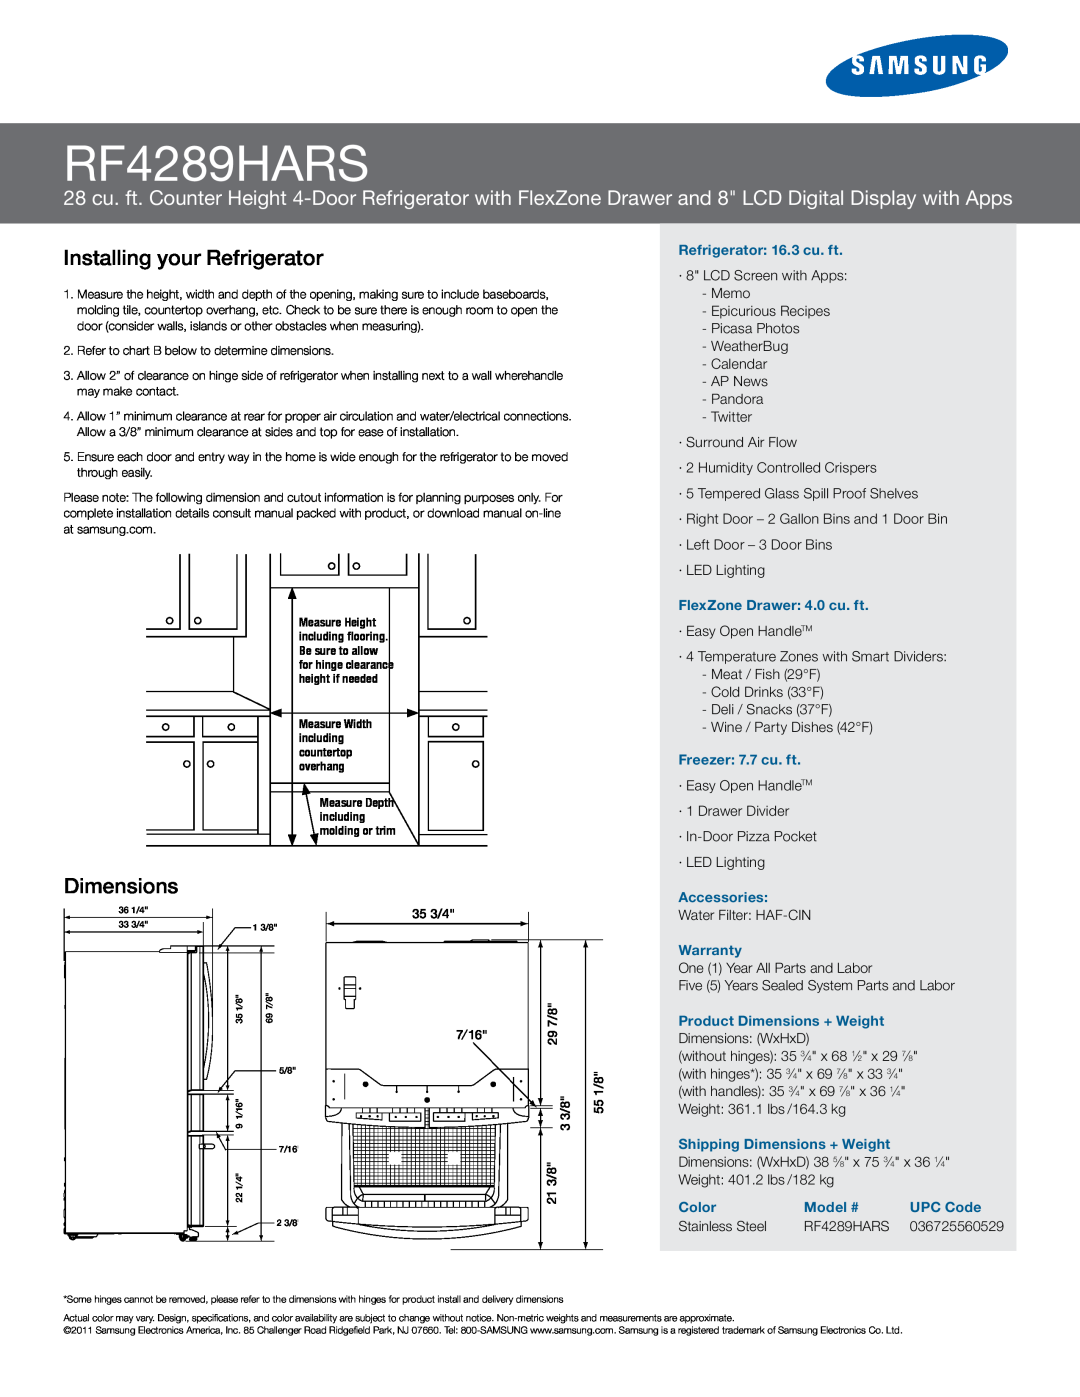 Samsung RF4289HARS manual Installing your Refrigerator, Dimensions 